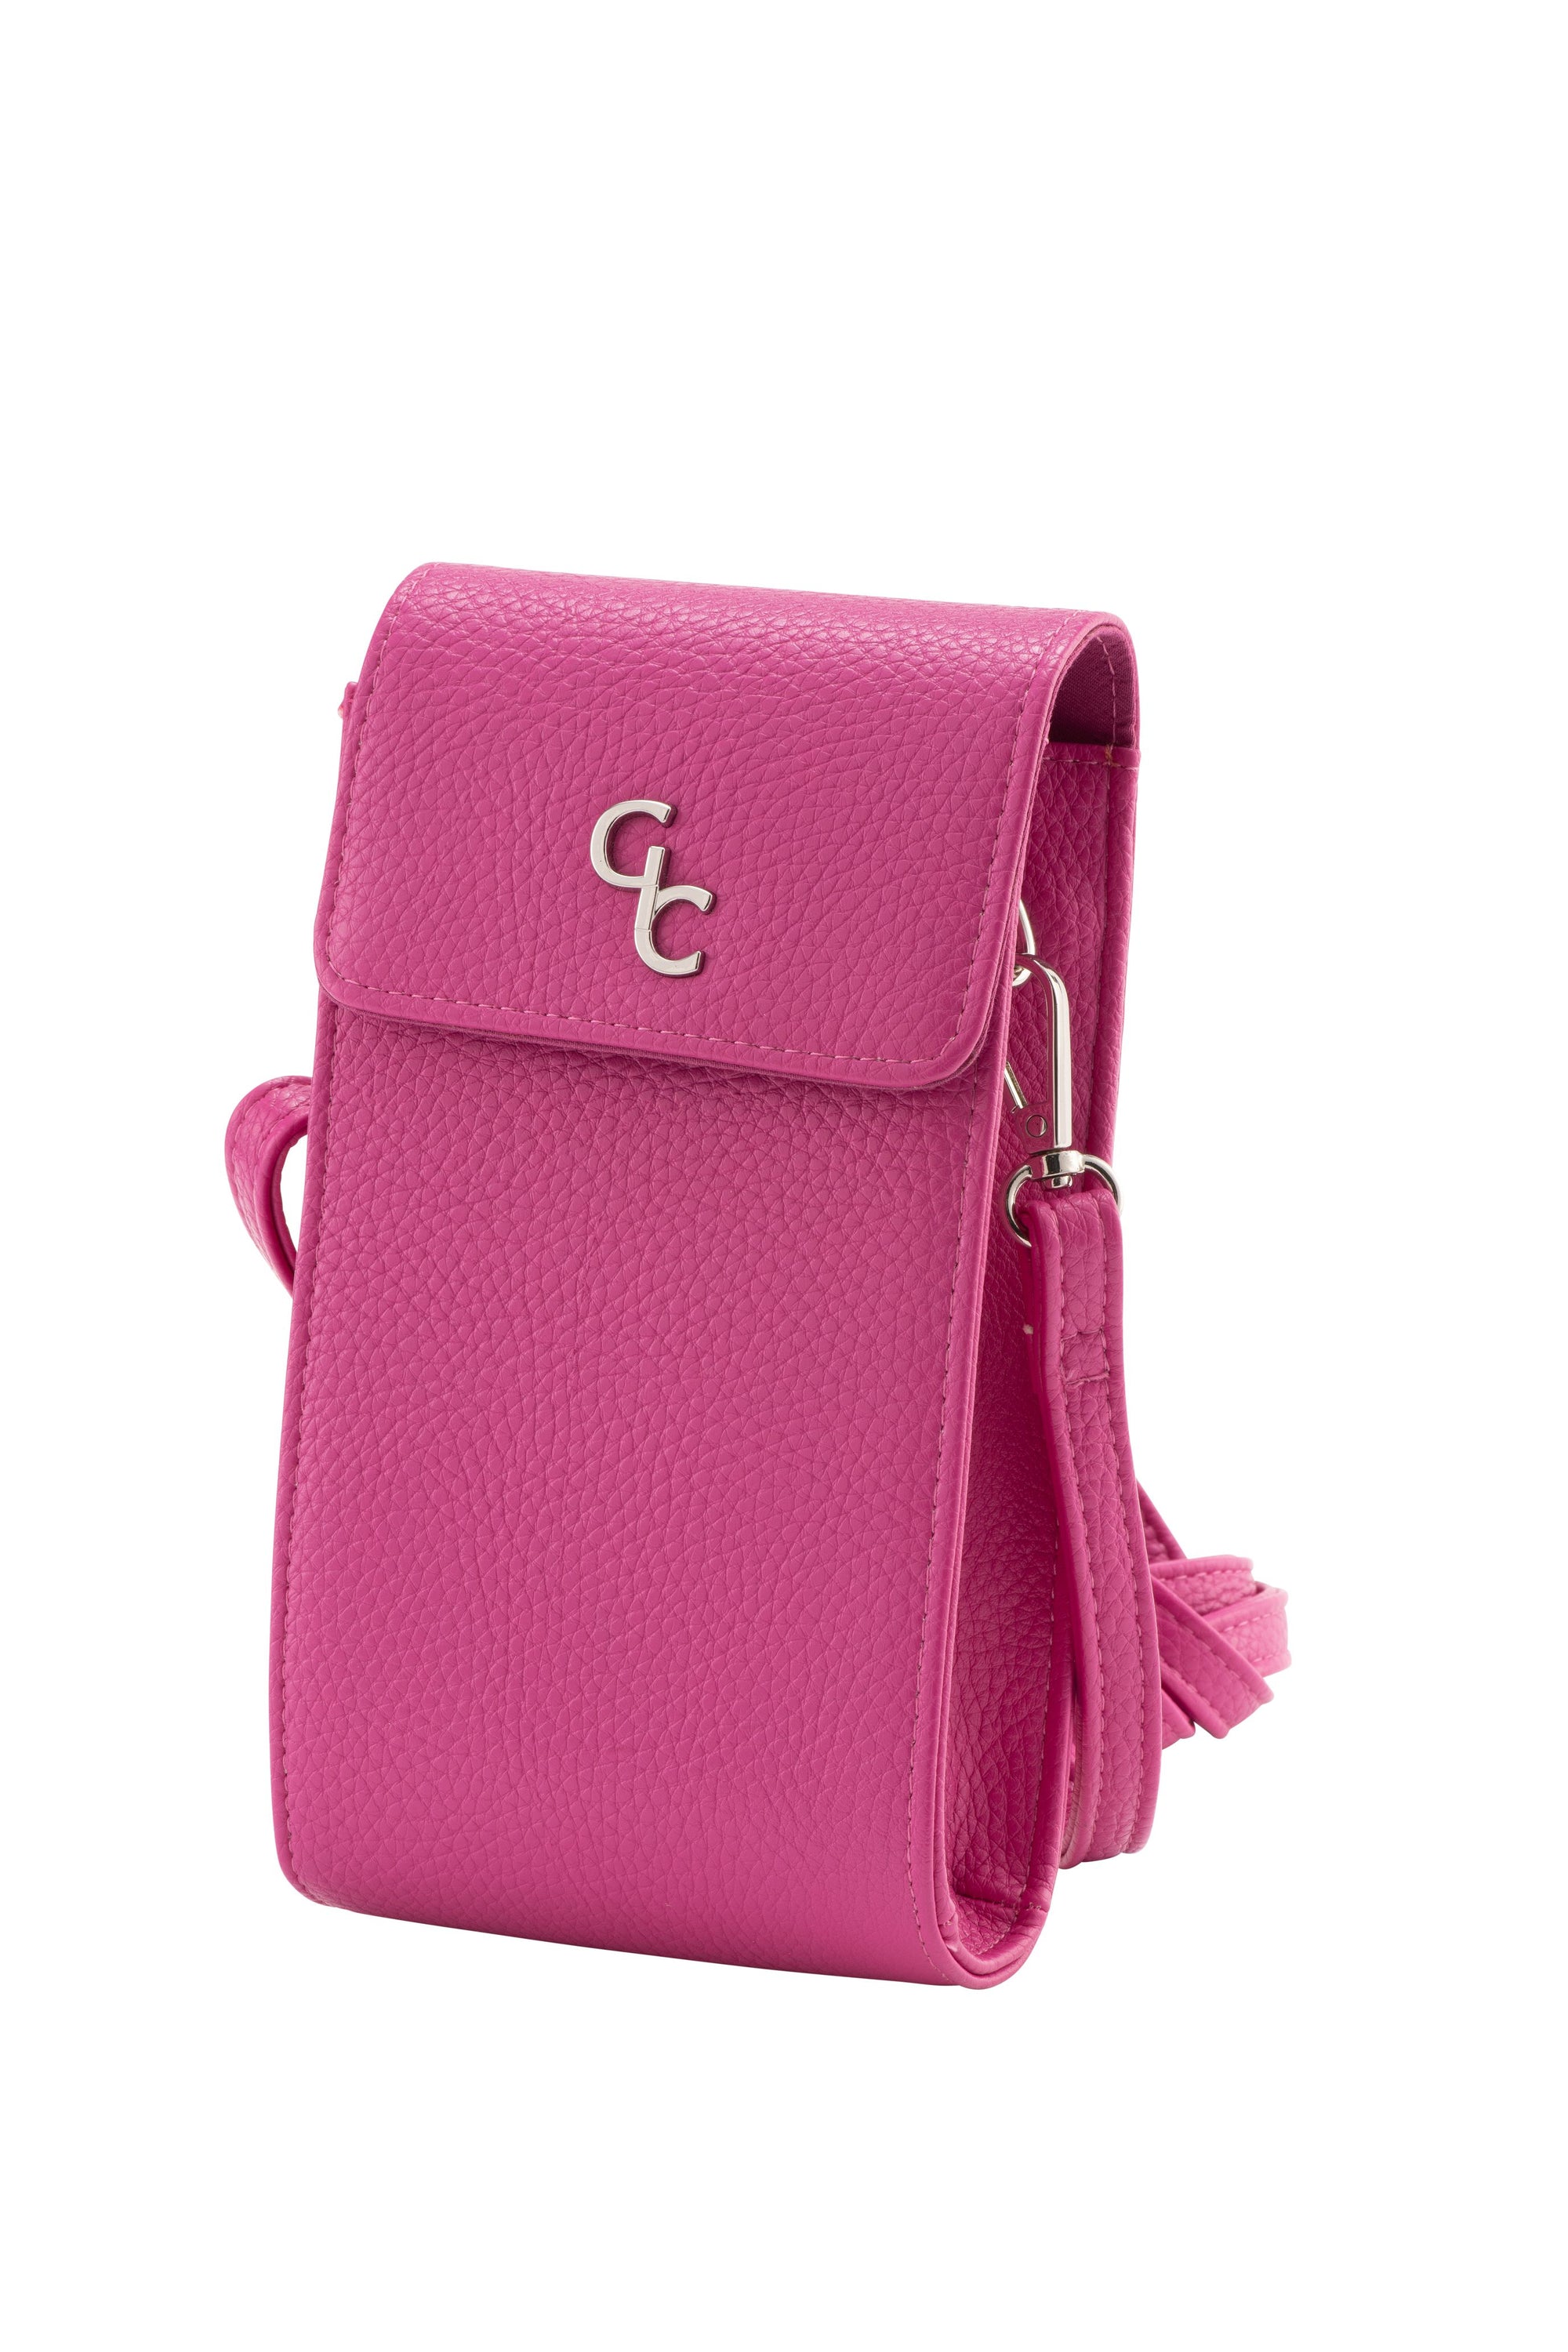 Mini Cross Body Bag - Cerise Pink